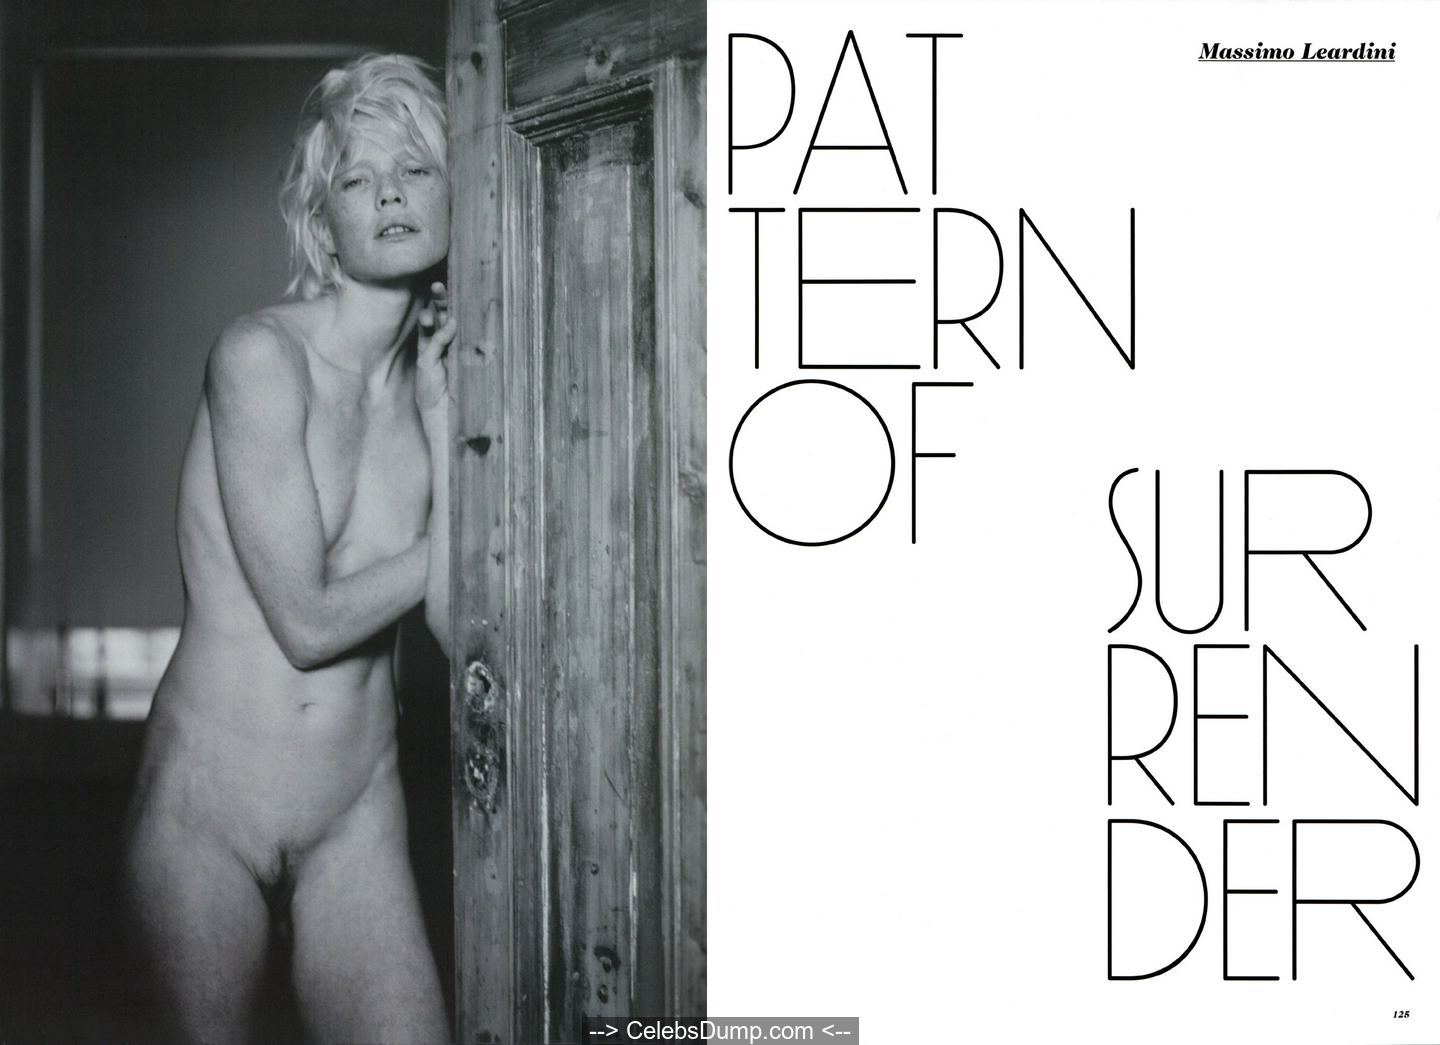 Blonde Marianne Schroder fully nude for S Magazine.